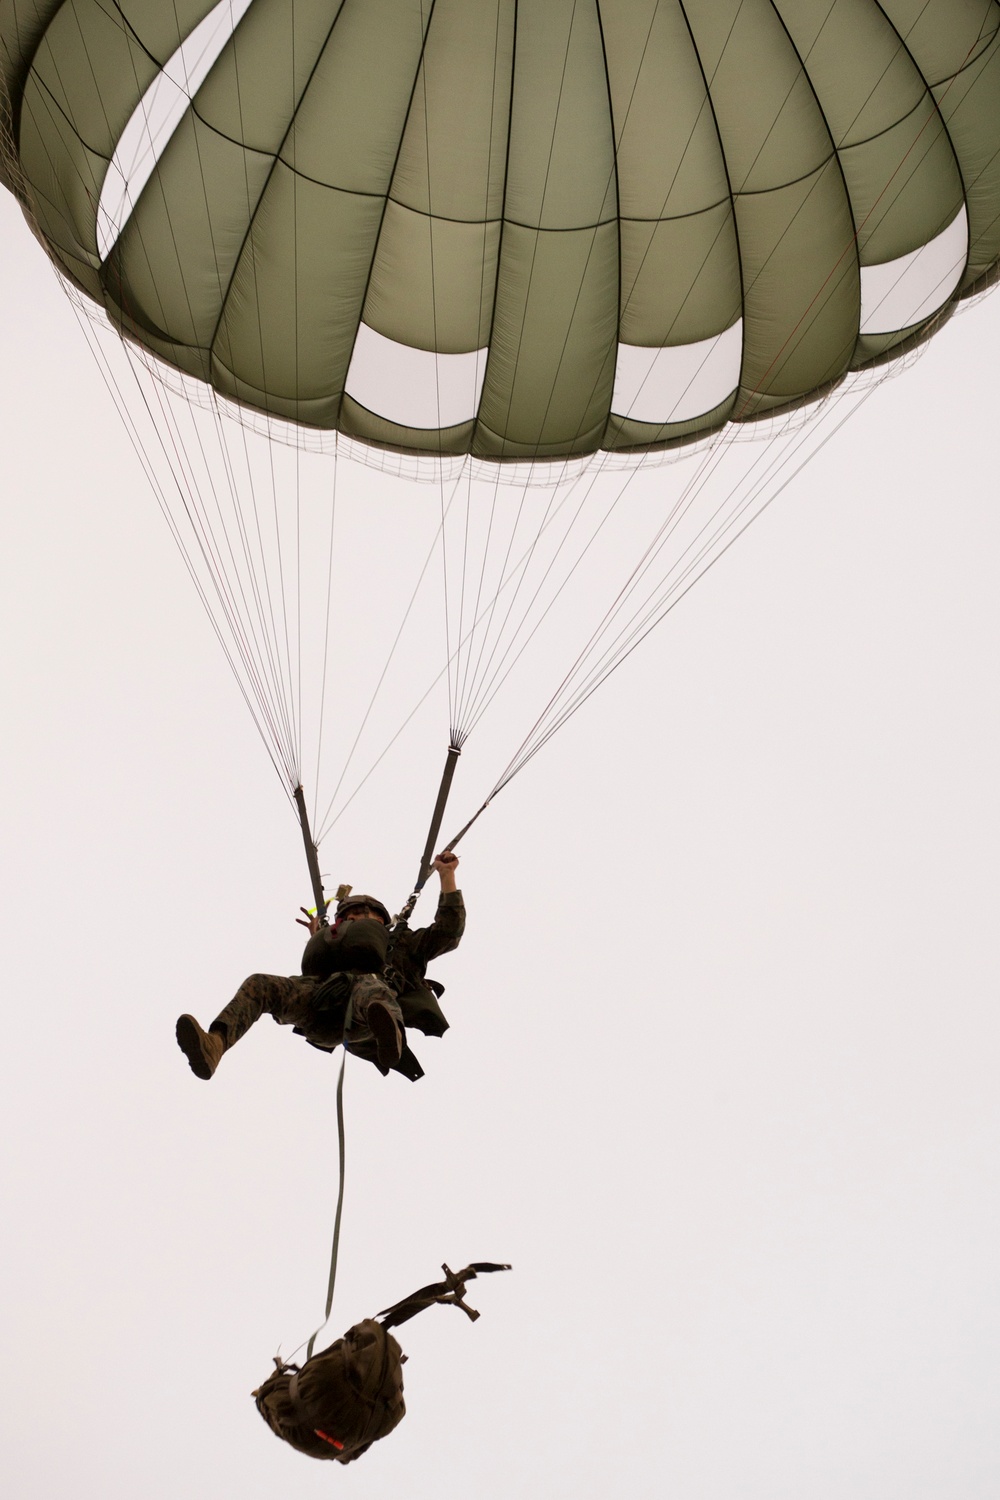 Marines soar through Yokota skies